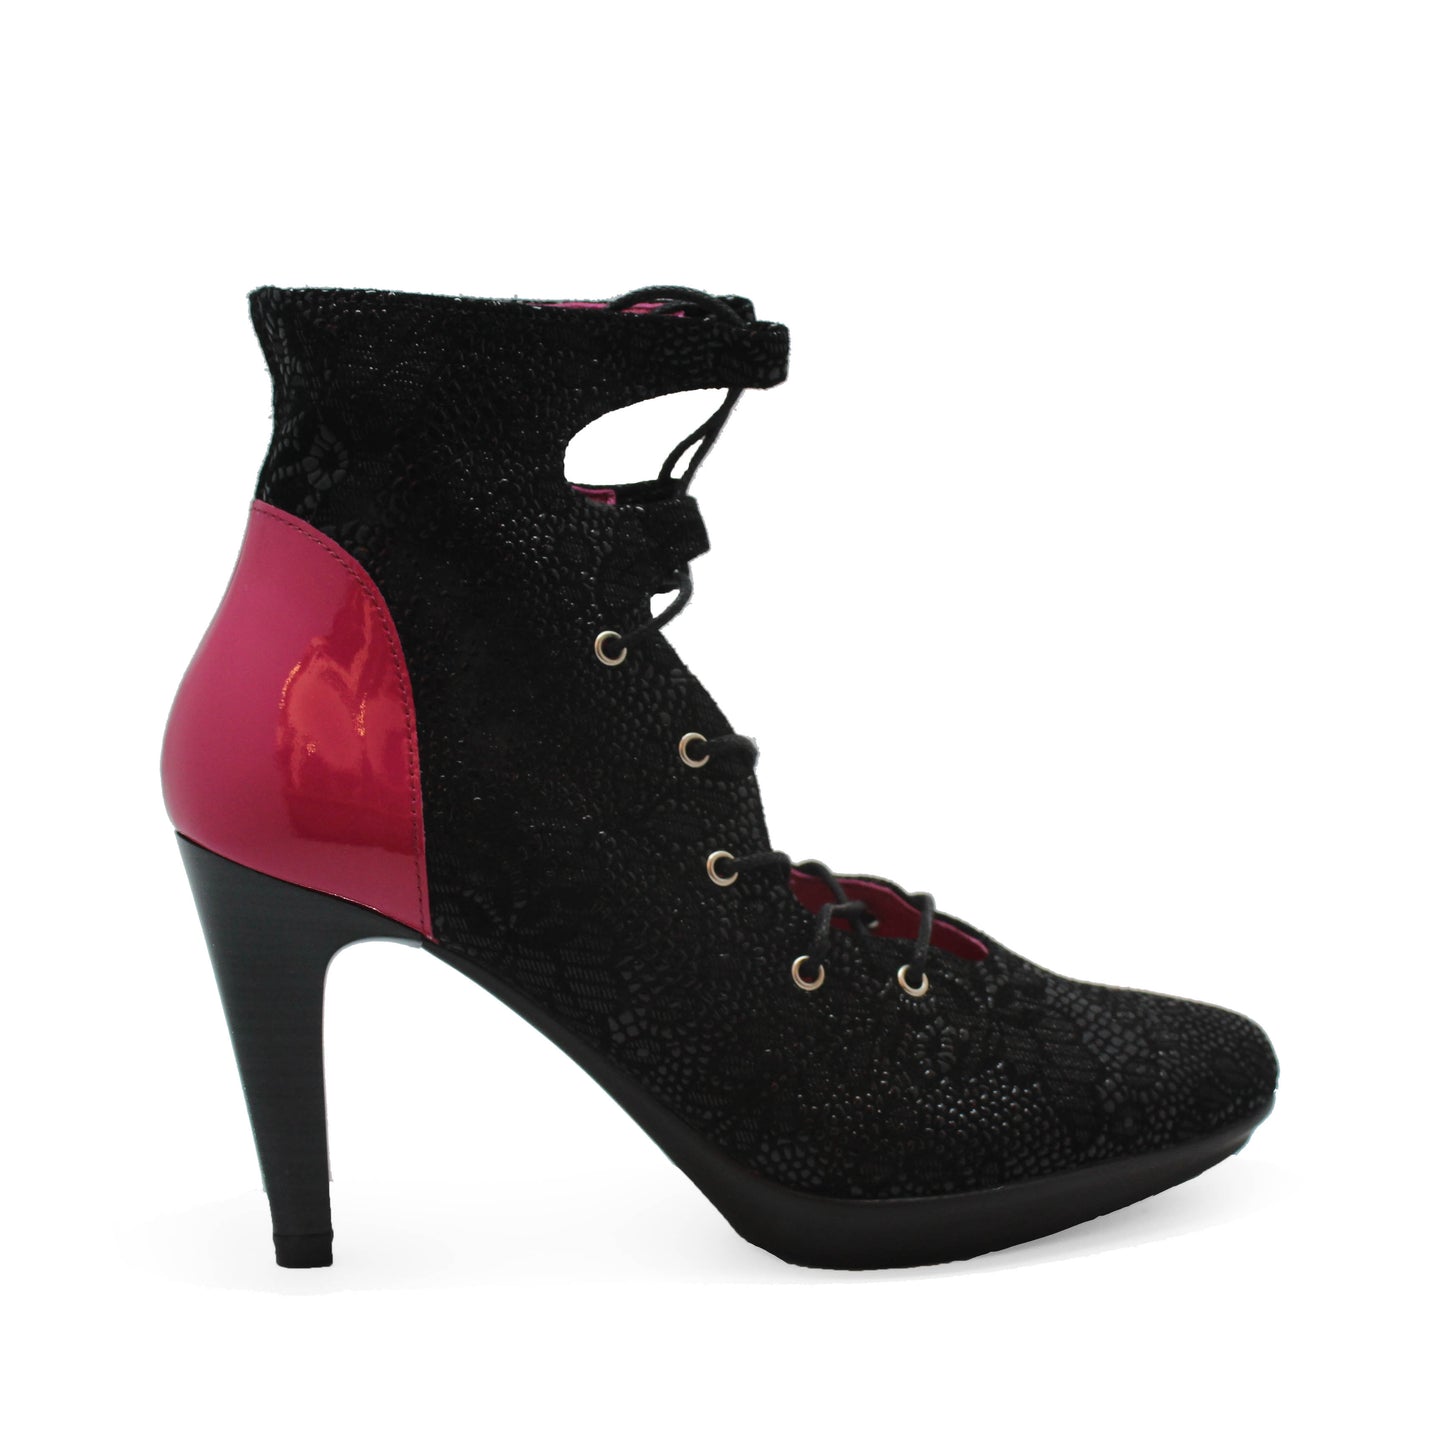 St Martins - Black/Fuchsia high heel shoe